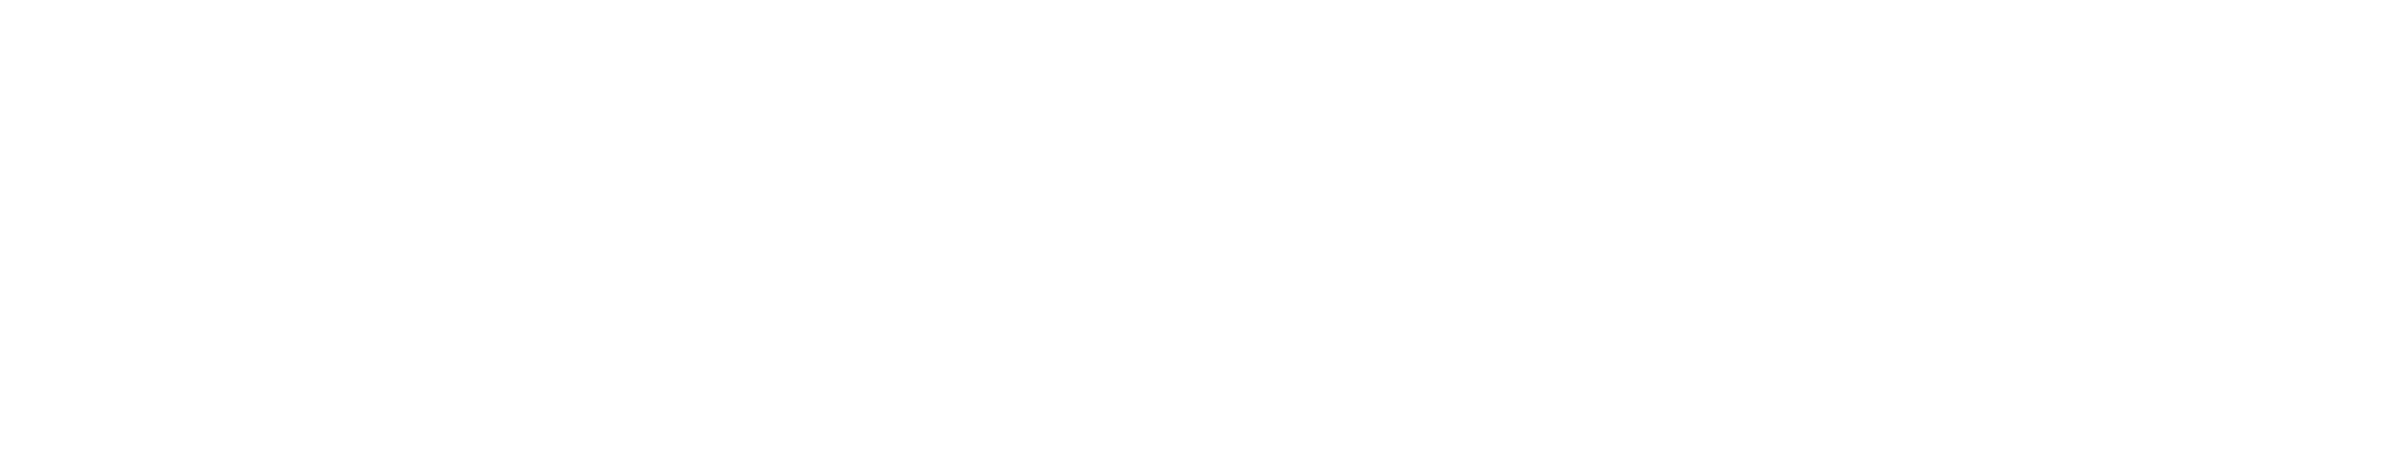 SKAGEN Logo